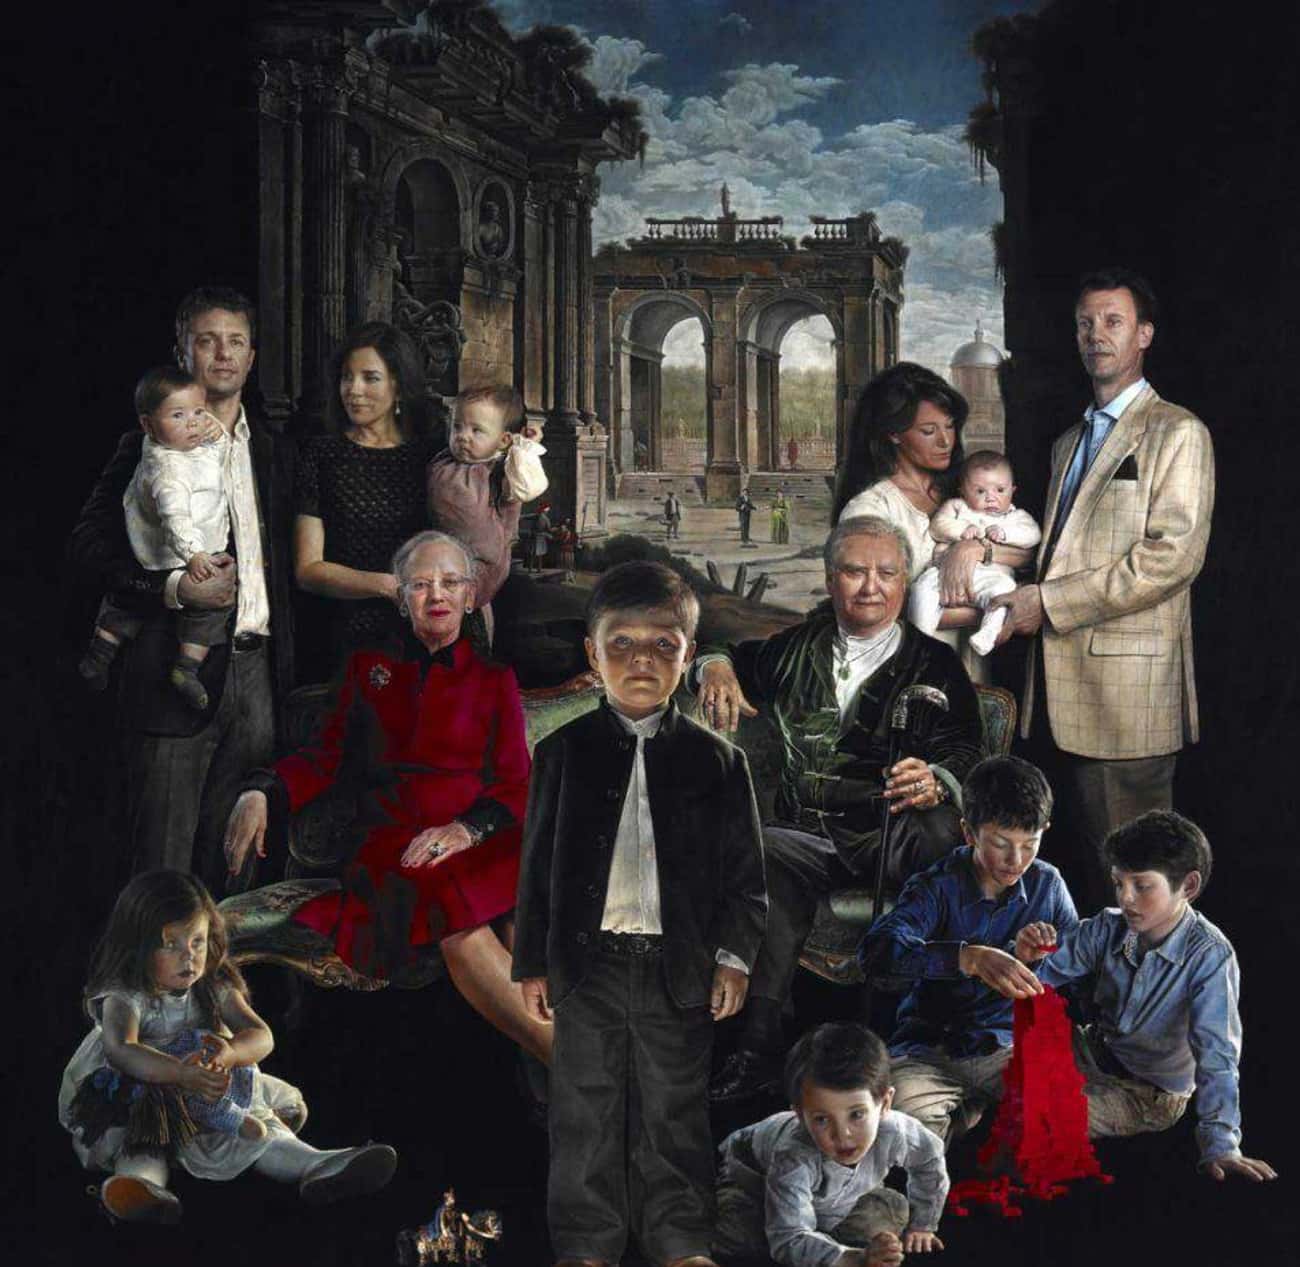 Danish Royal Family by Thomas Kluge, 2013